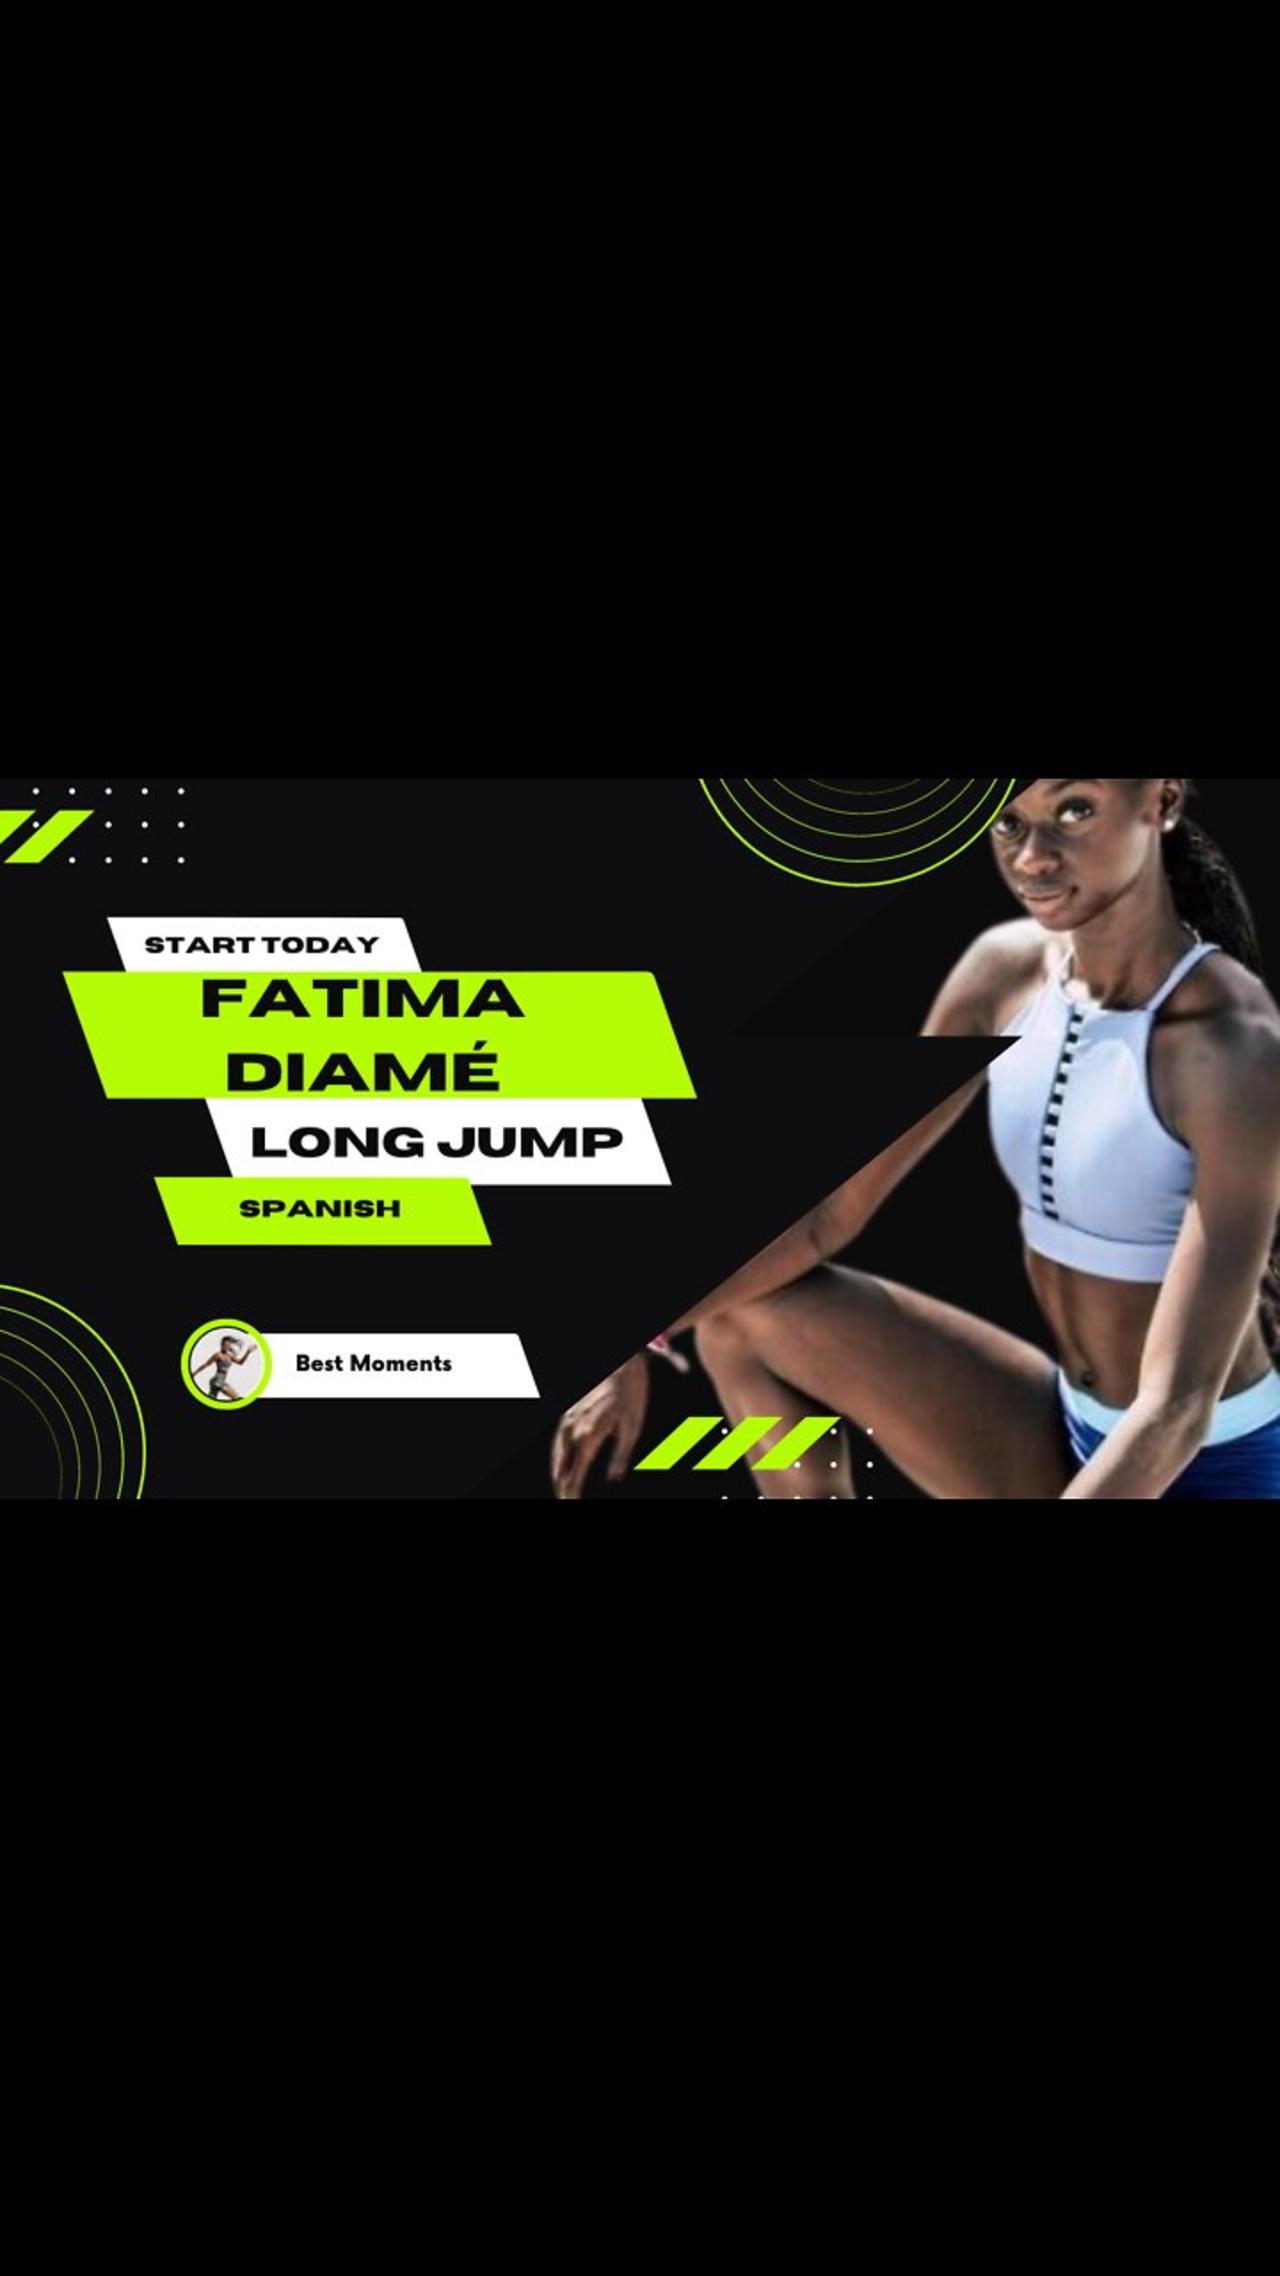 Fatima Diame Long Jump Spanish Champion Best Moments